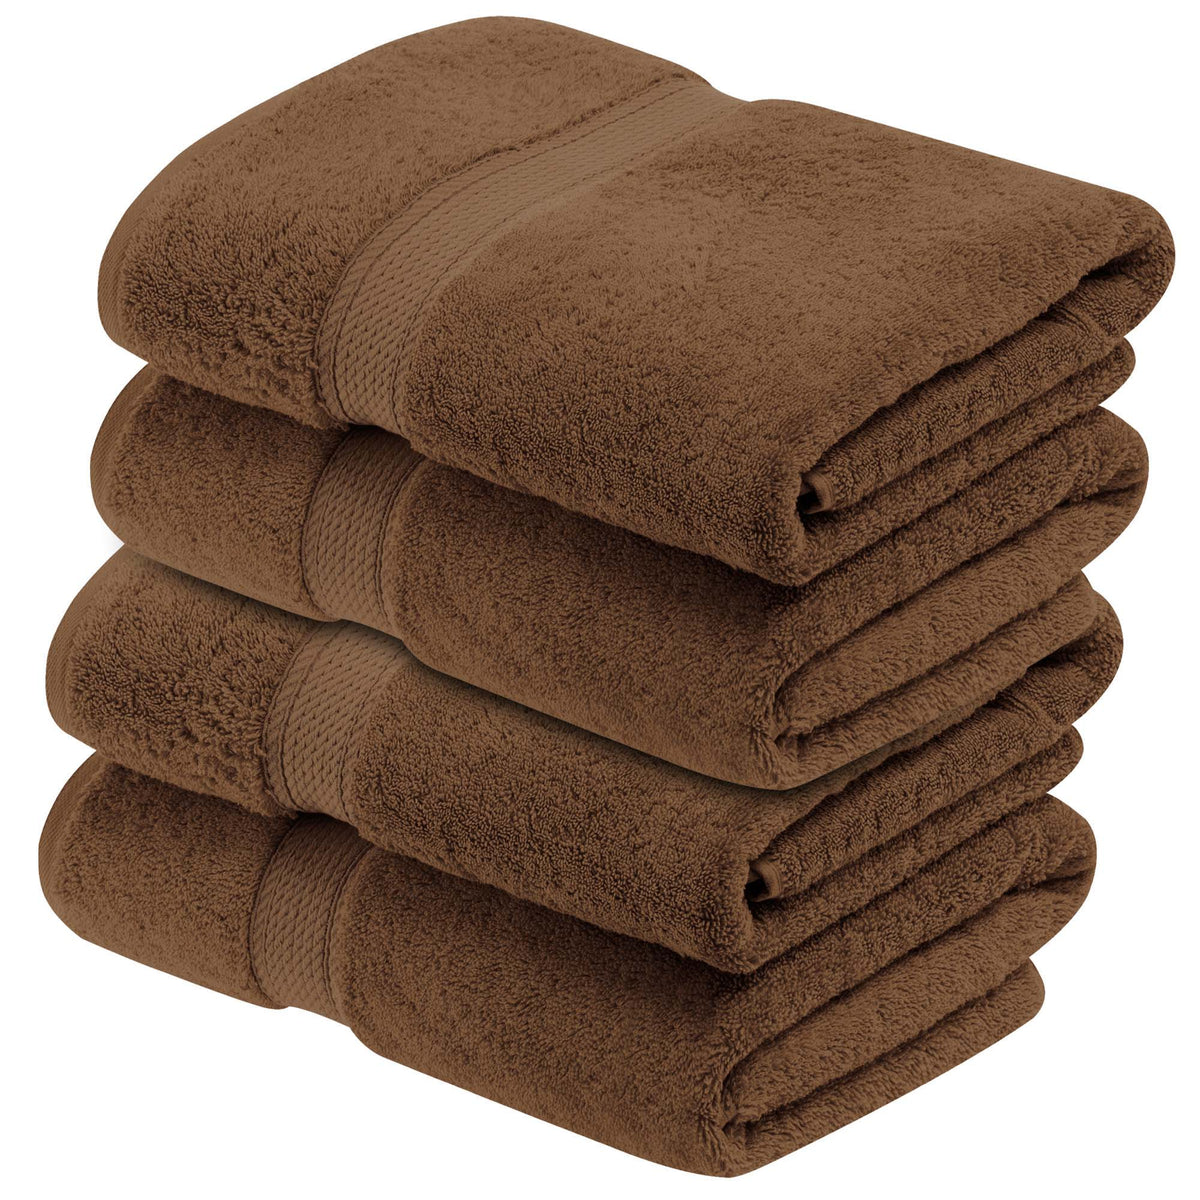 Superior Egyptian Cotton Plush Heavyweight Absorbent Luxury Soft Bath Towel (Set of 4)